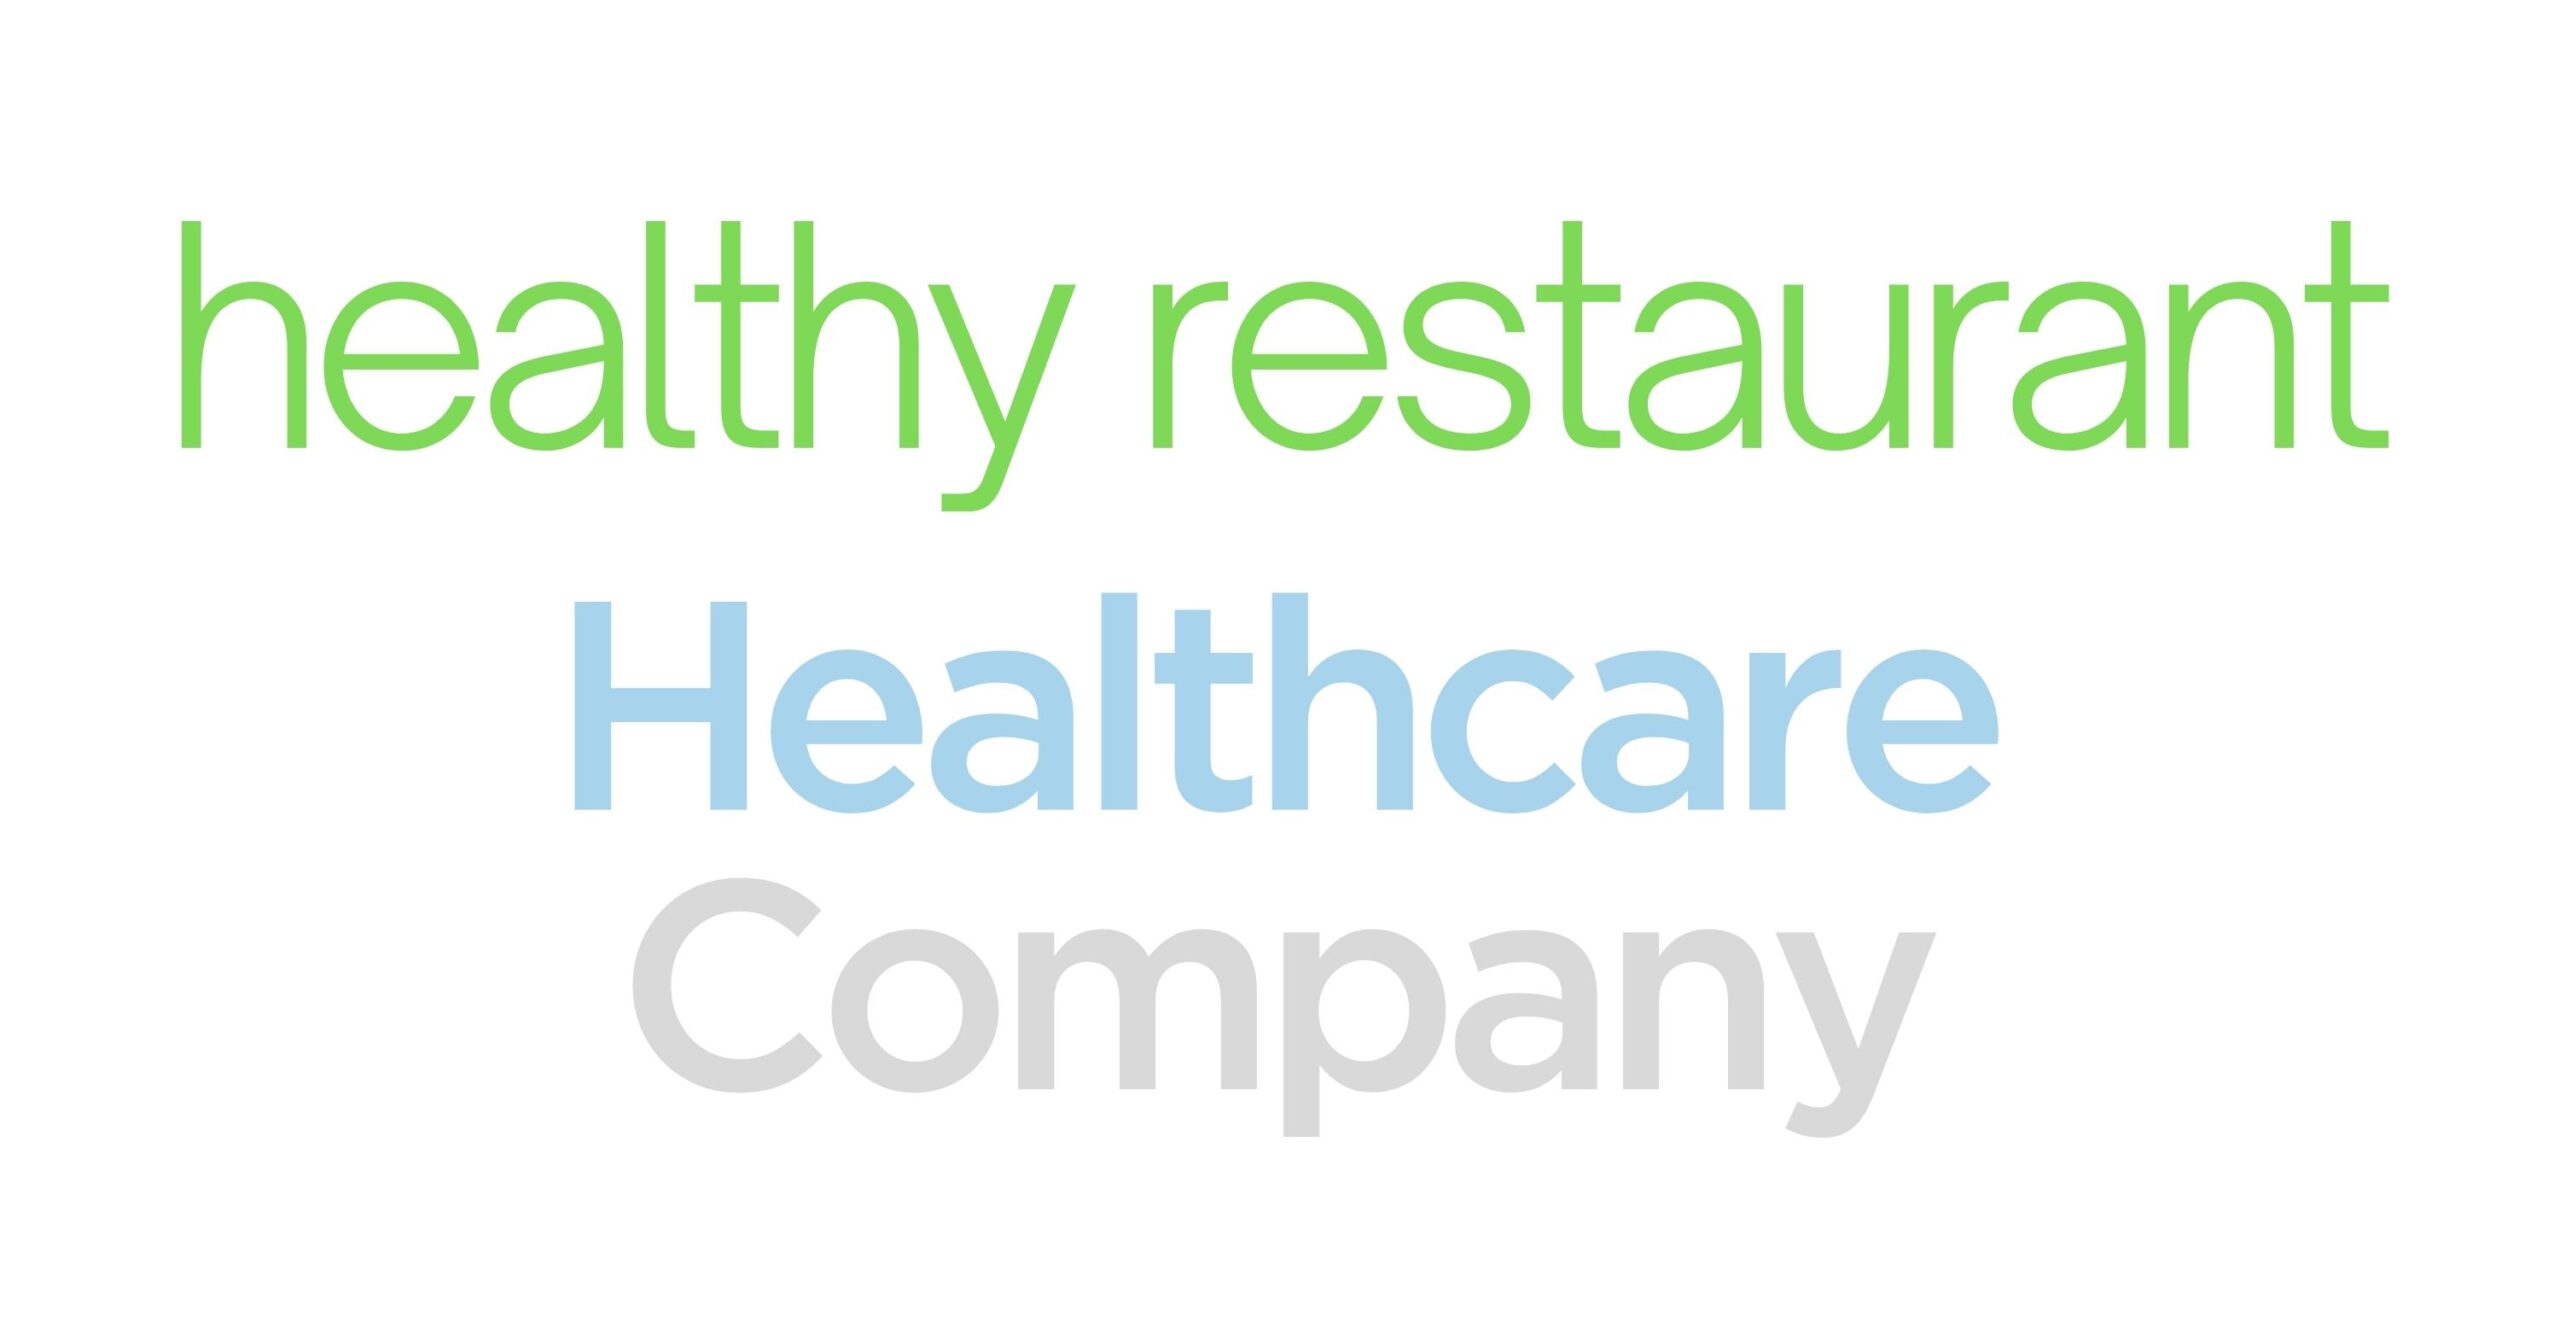 Healthy Restaurant. Healthcare Company